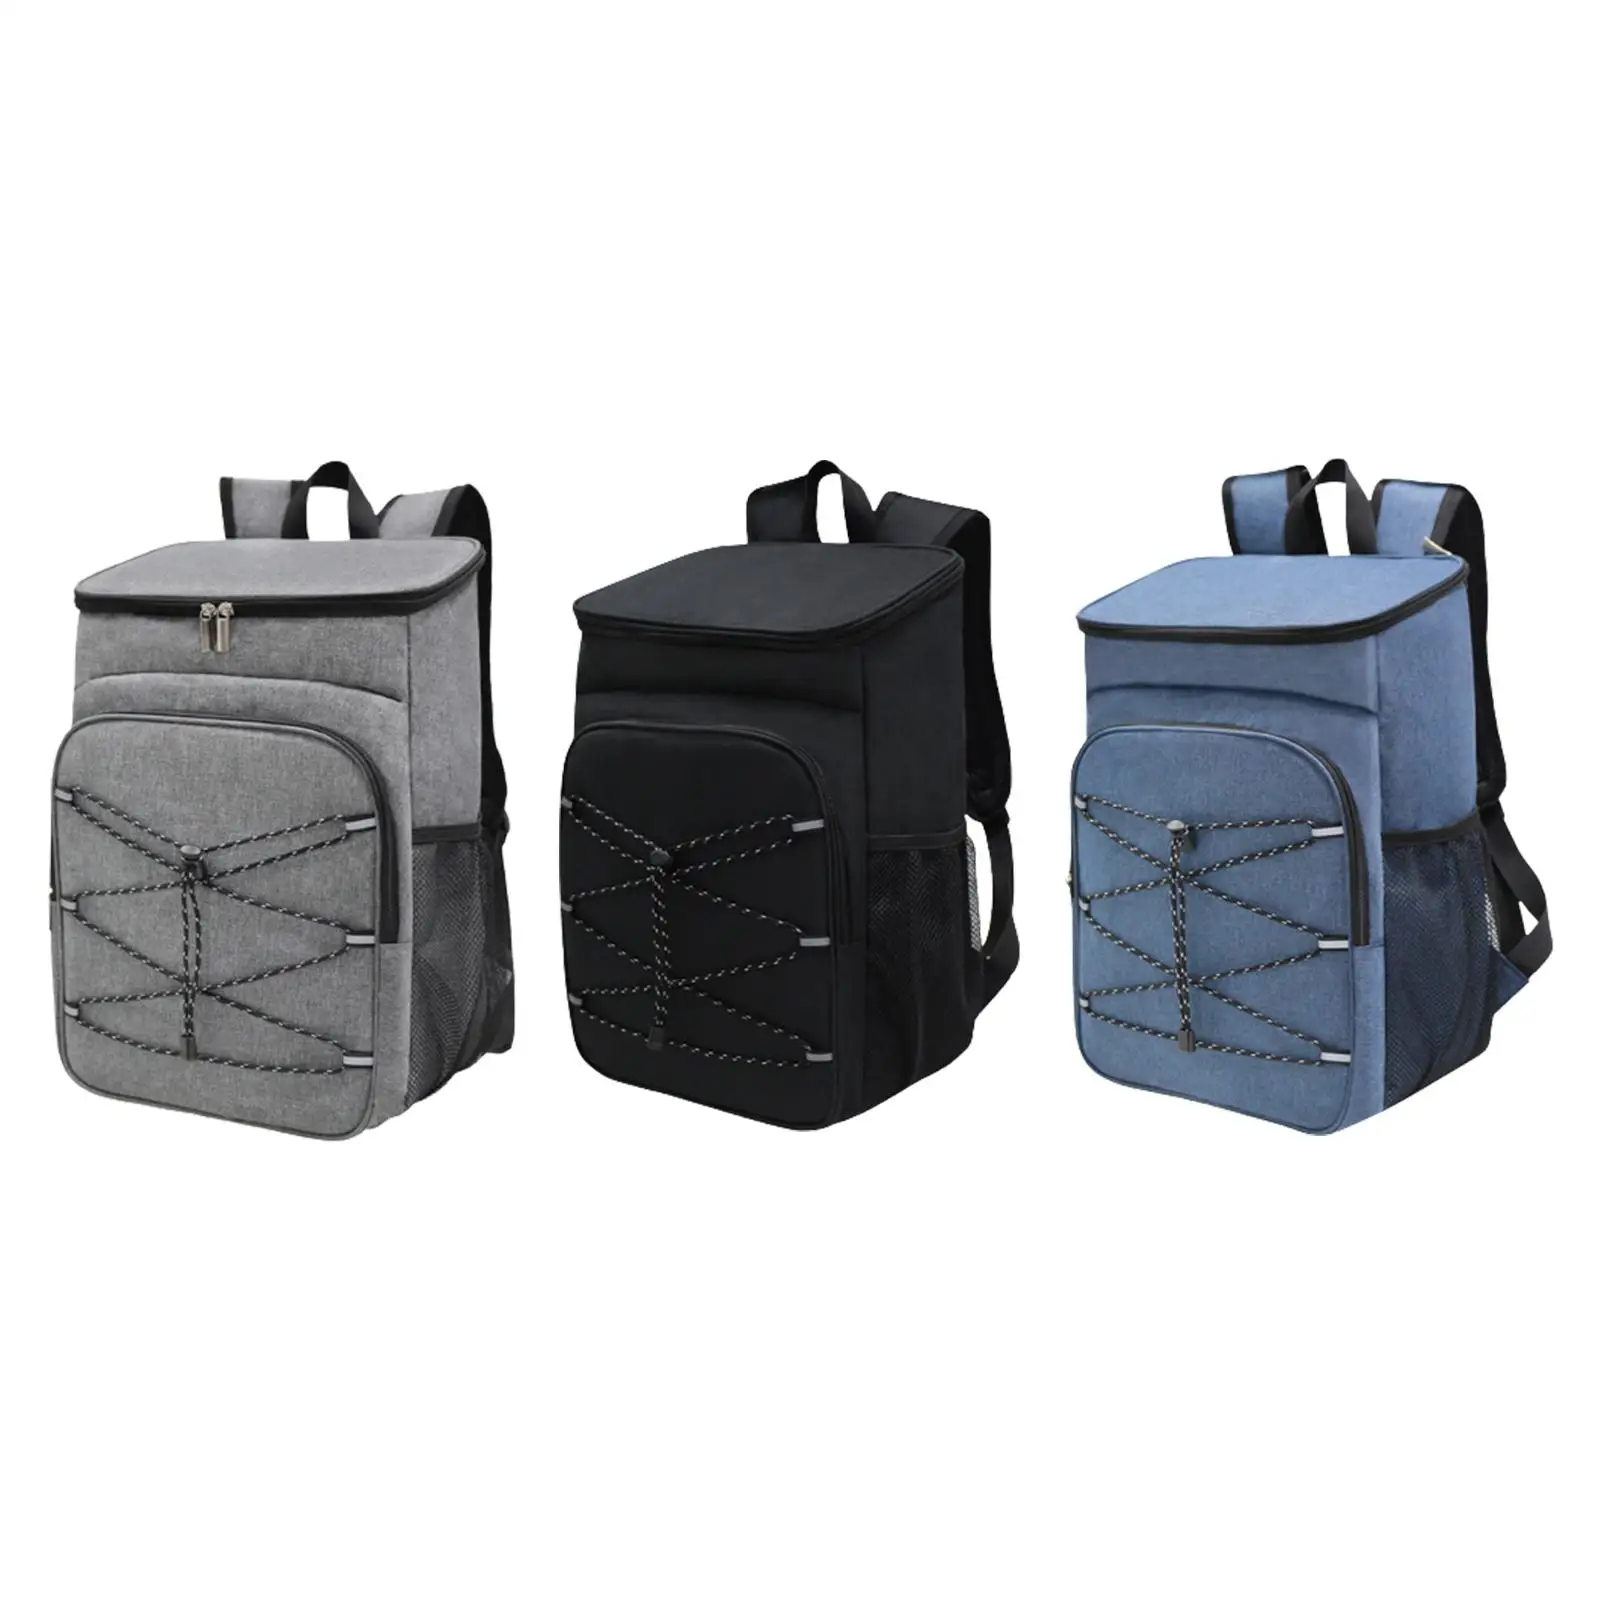 Cooler Backpack Large Capacity Cooler Bag Mesh Pocket Multifunctional Men Women Thermal Bag for Camping Trips Fishing Hiking